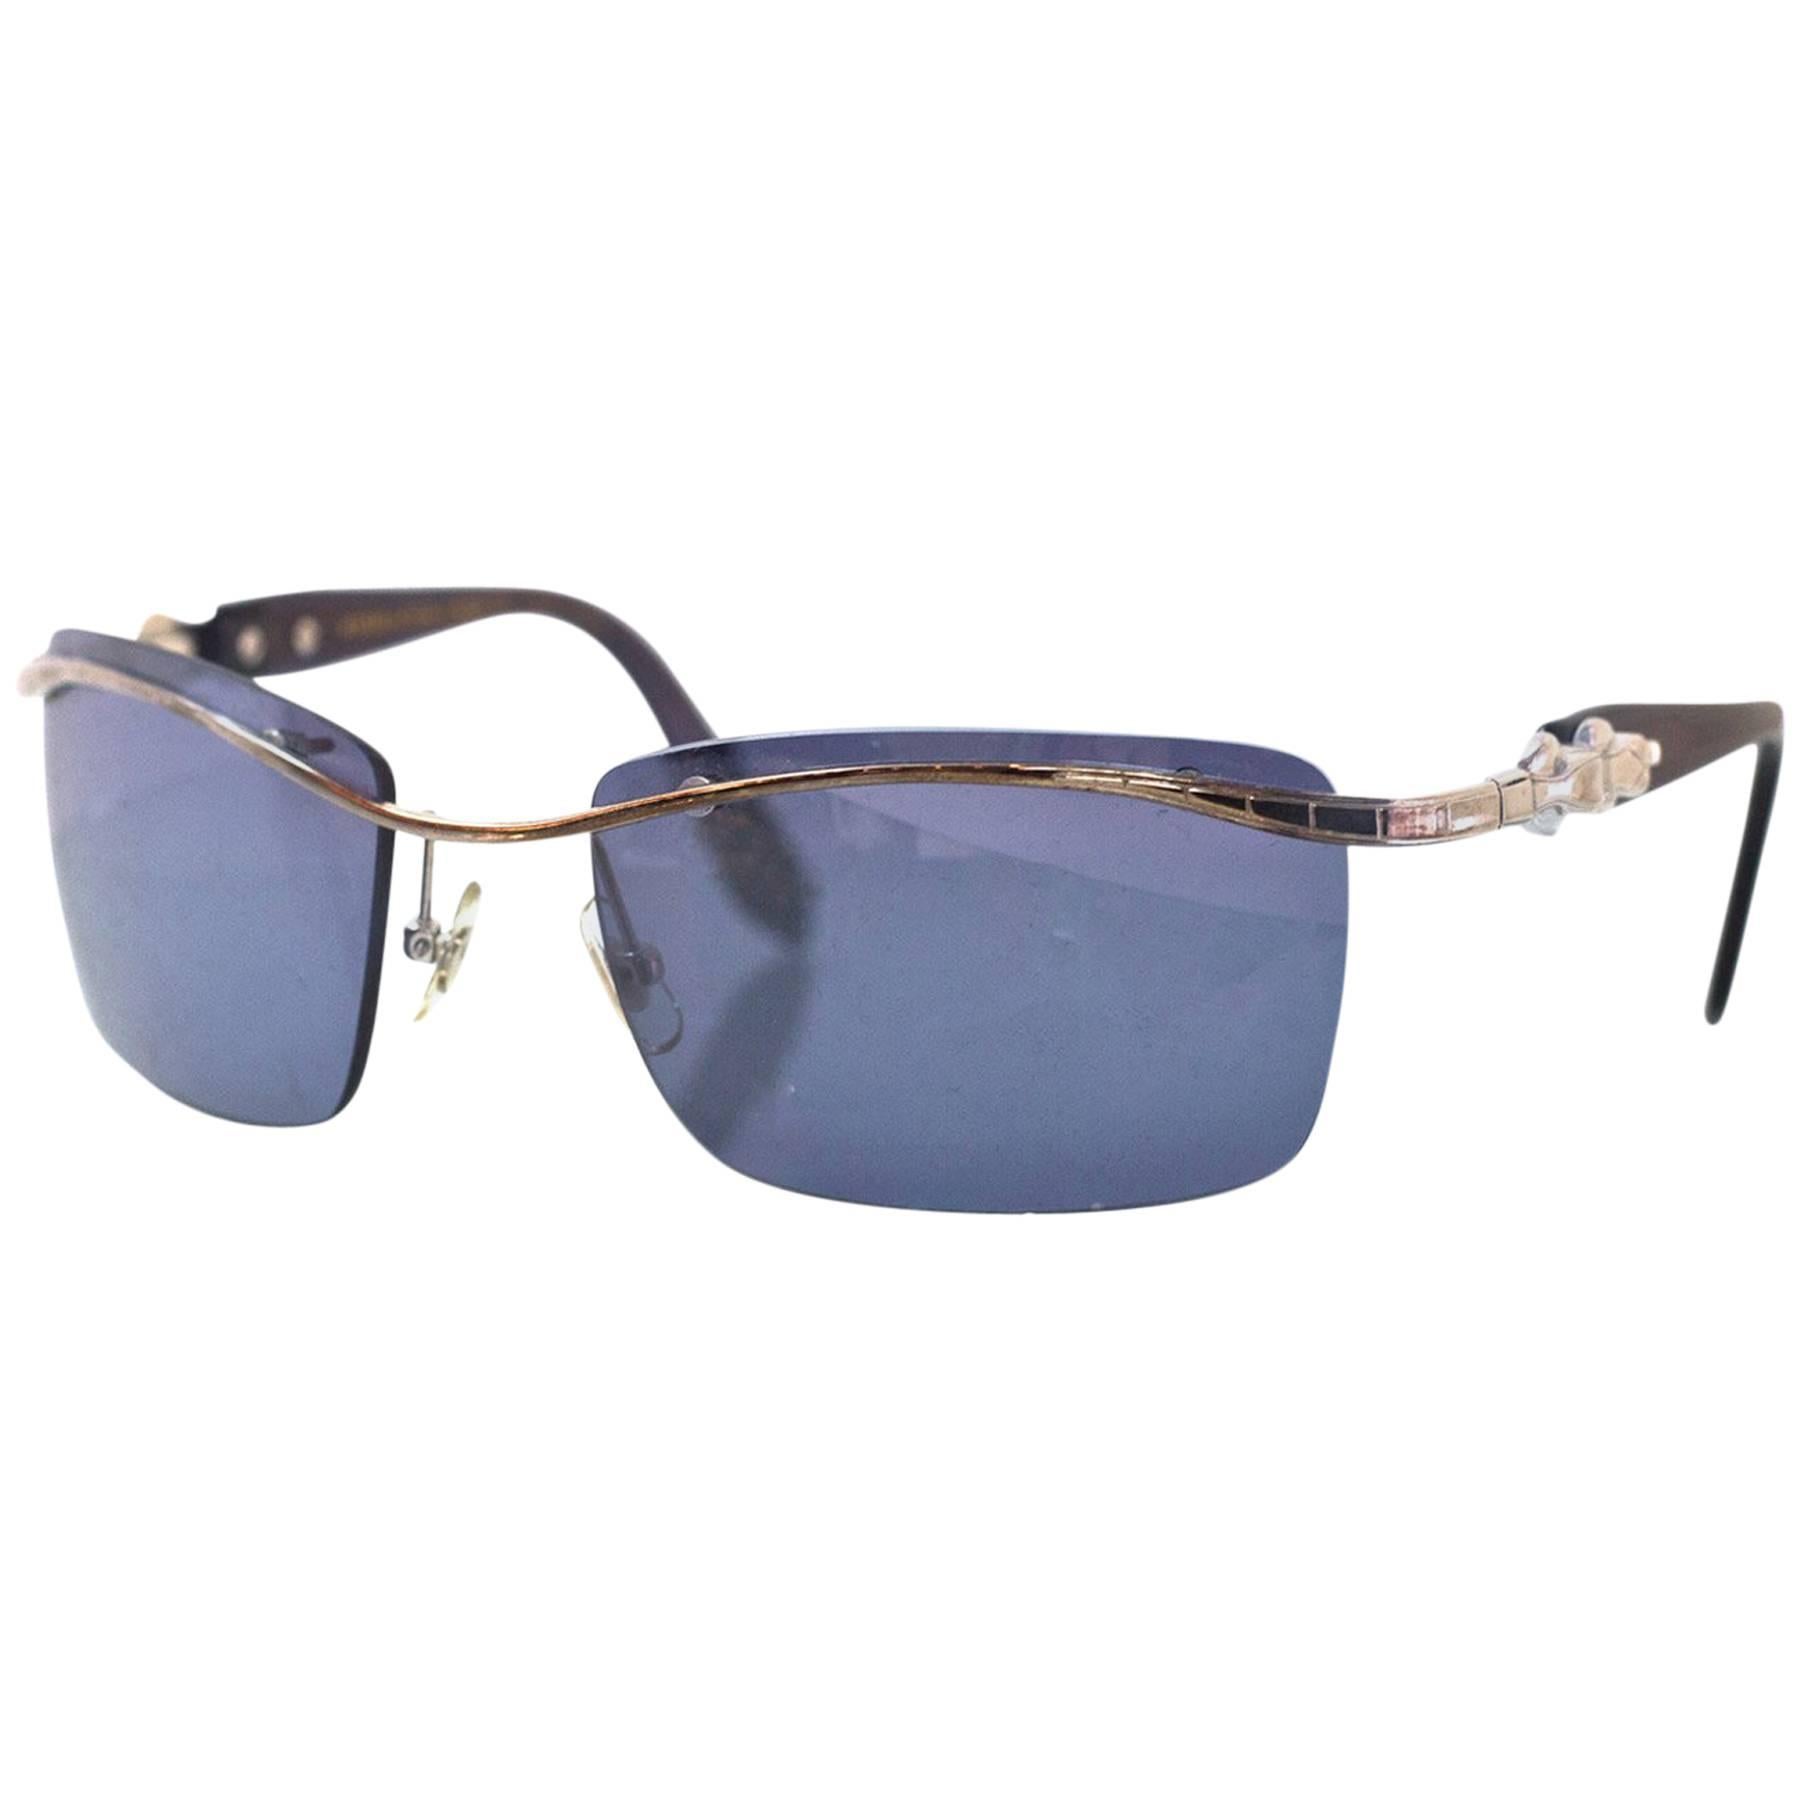 Kieselstein-Cord Black Super Star Mirrored Sunglasses with Case